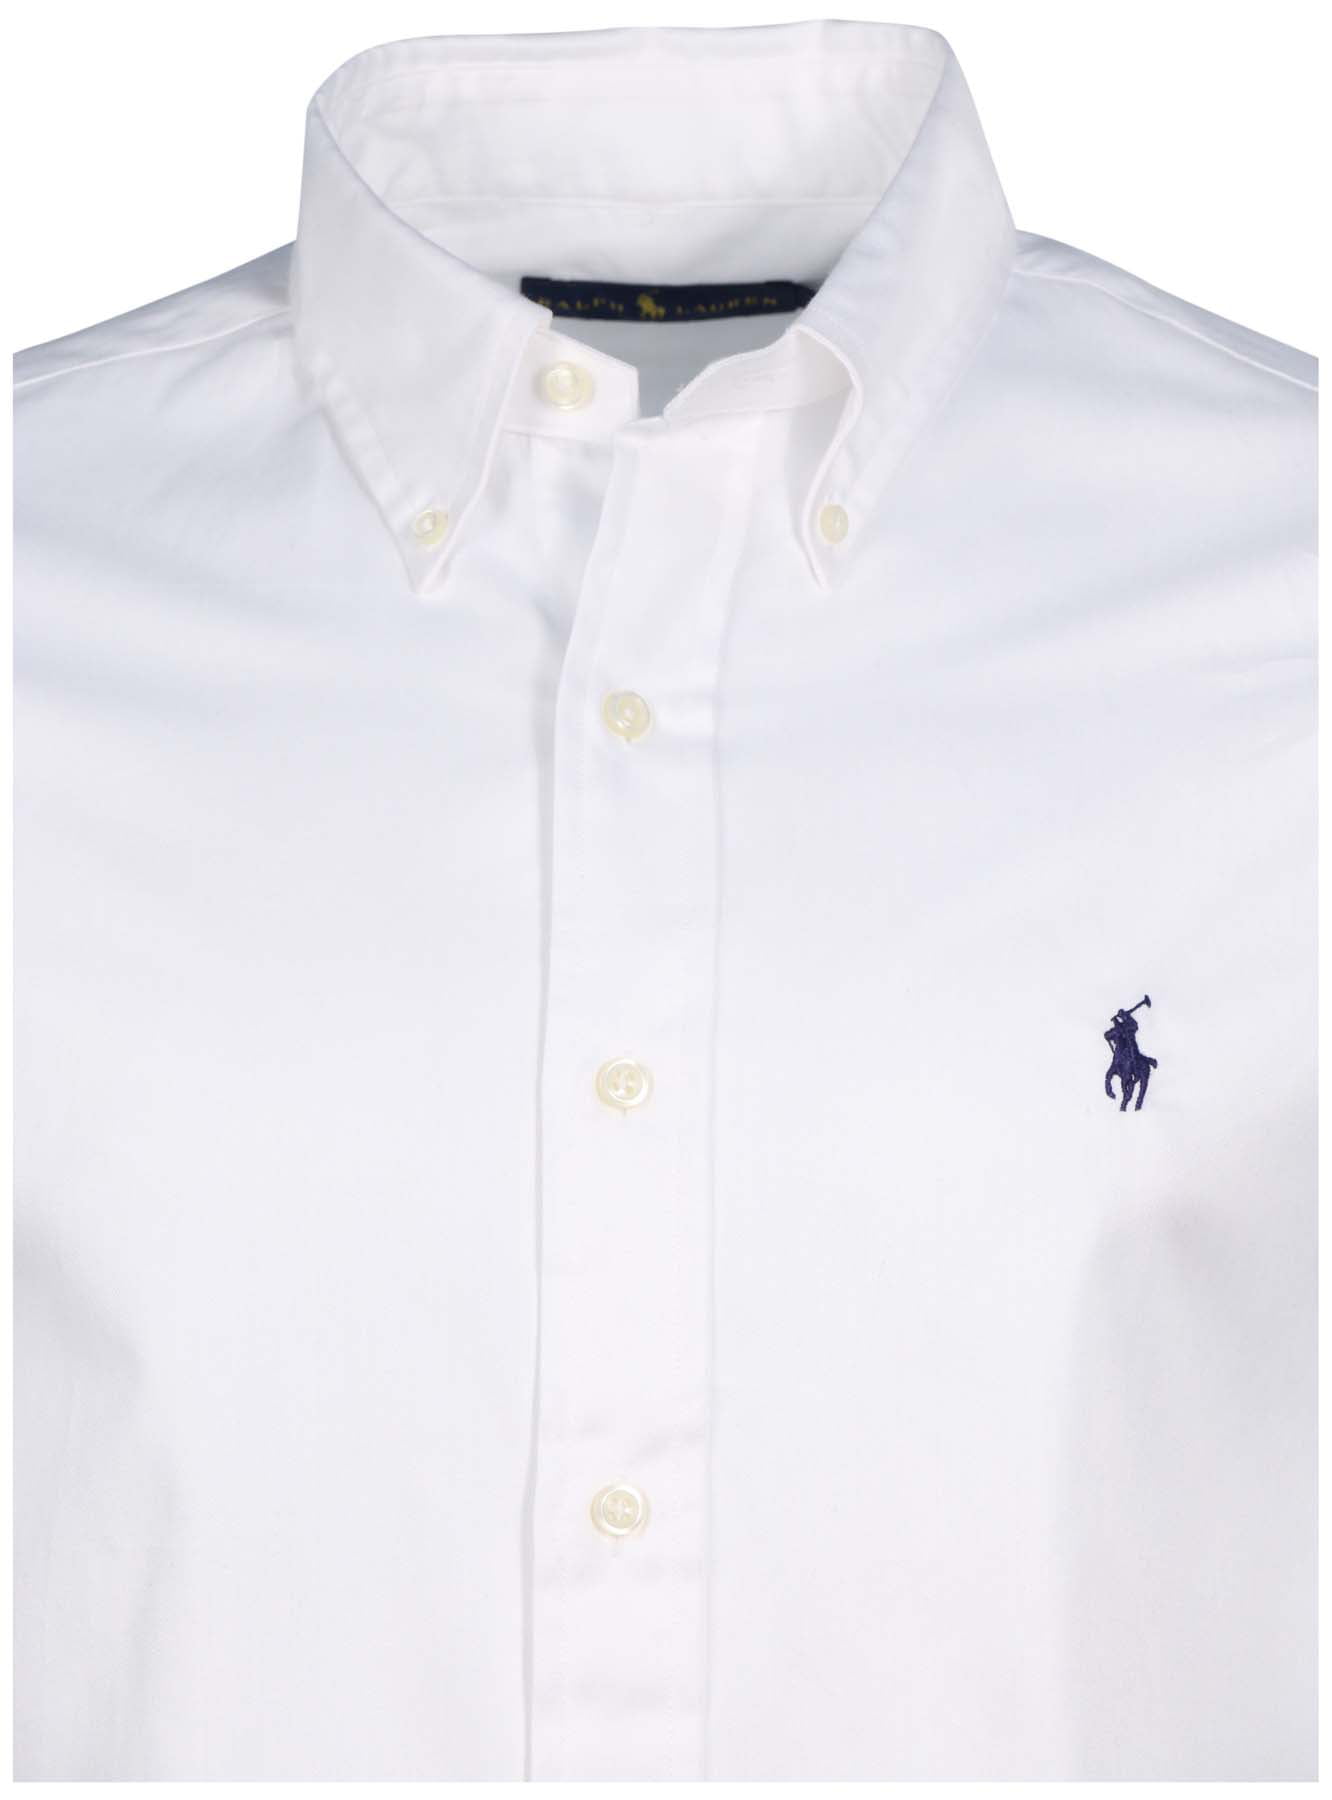 Polo Ralph Lauren Men's Long Sleeve Slim Button Down Shirt-White 710 -  